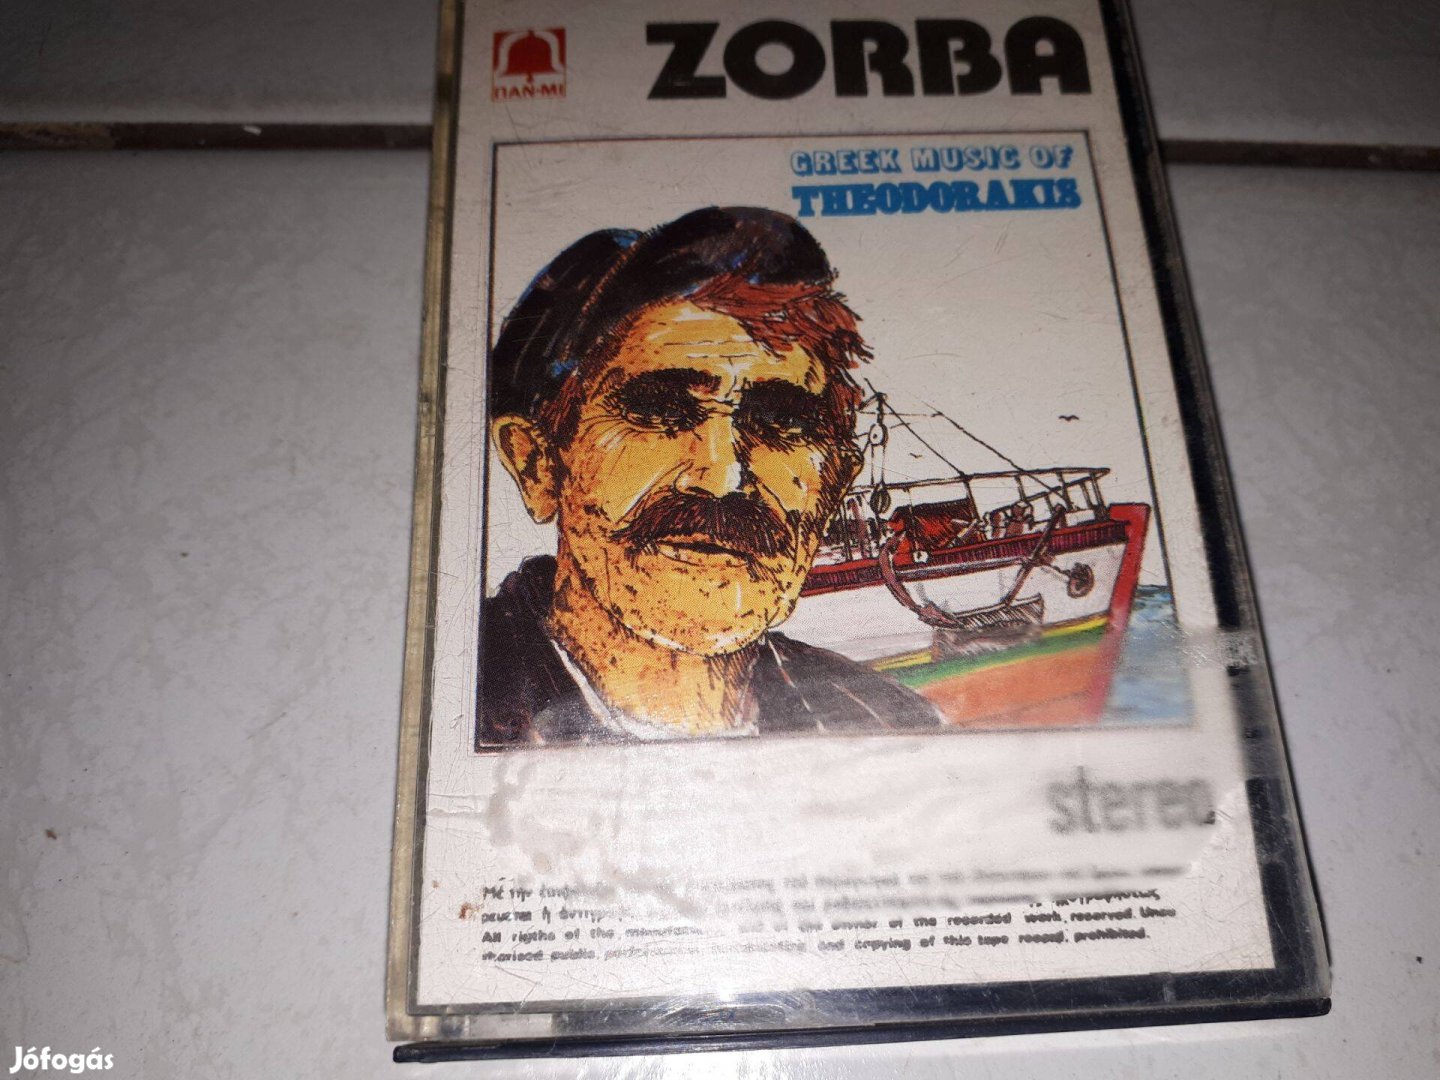 Zorba - Greek Music of Theodorakis műsoros magnó kazetta, MC